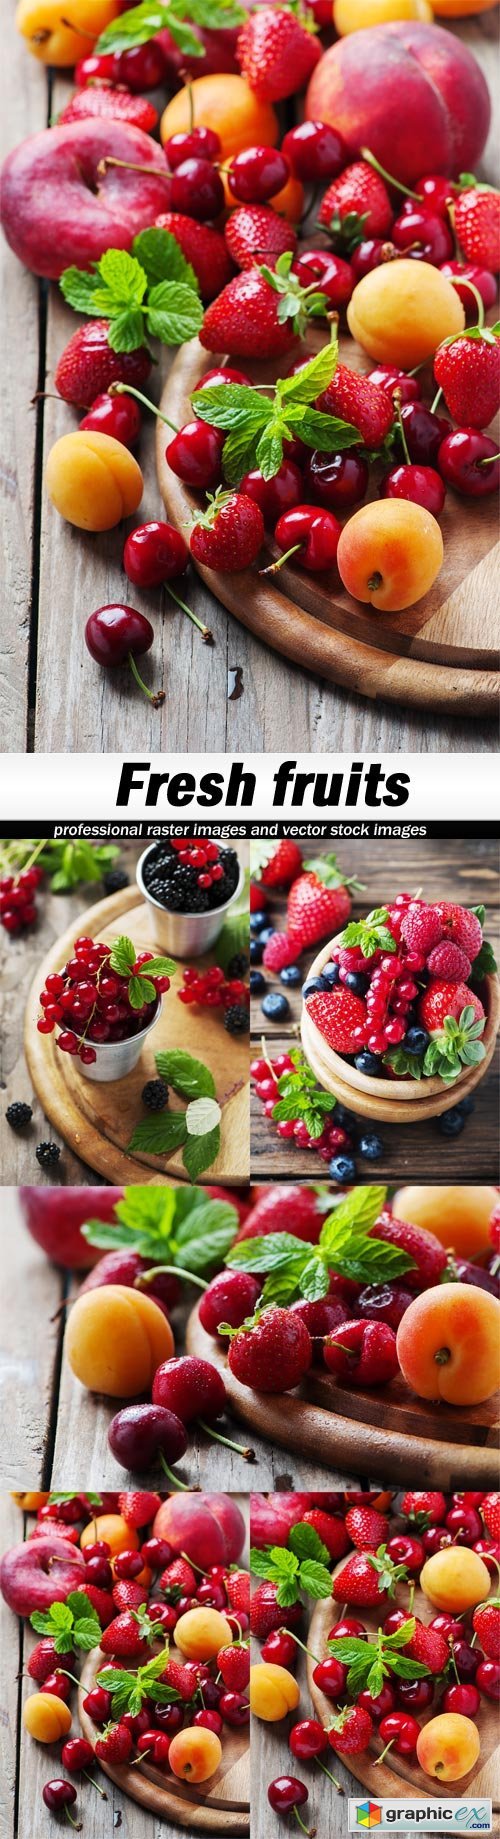 Fresh fruits-5xUHQ JPEG